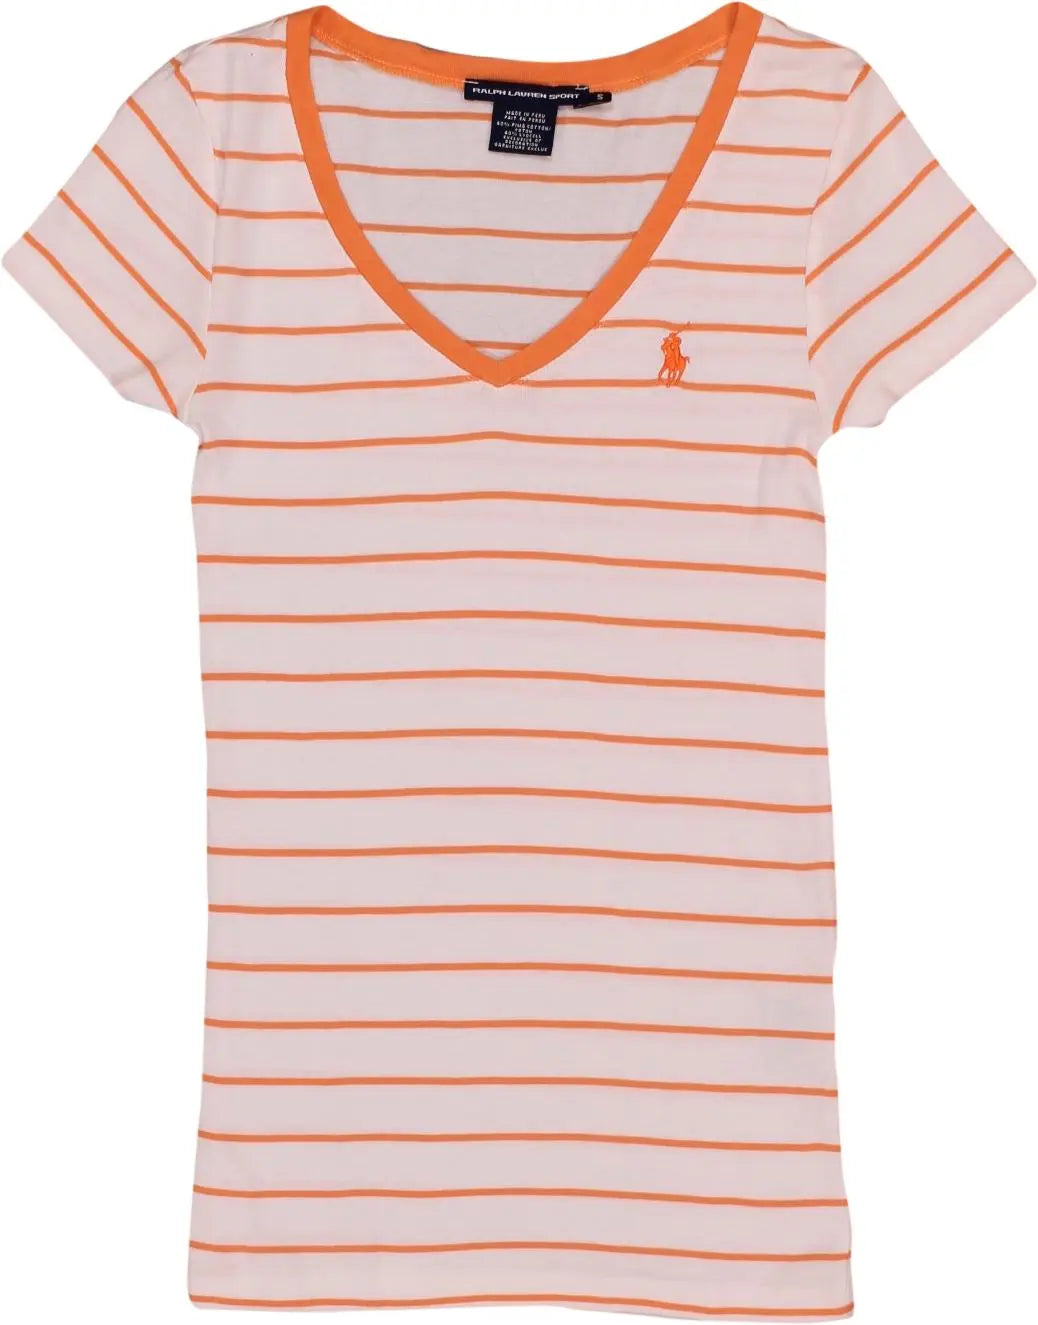 Ralph Lauren - Striped V-Neck T-shirt by Ralph Lauren Sport- ThriftTale.com - Vintage and second handclothing